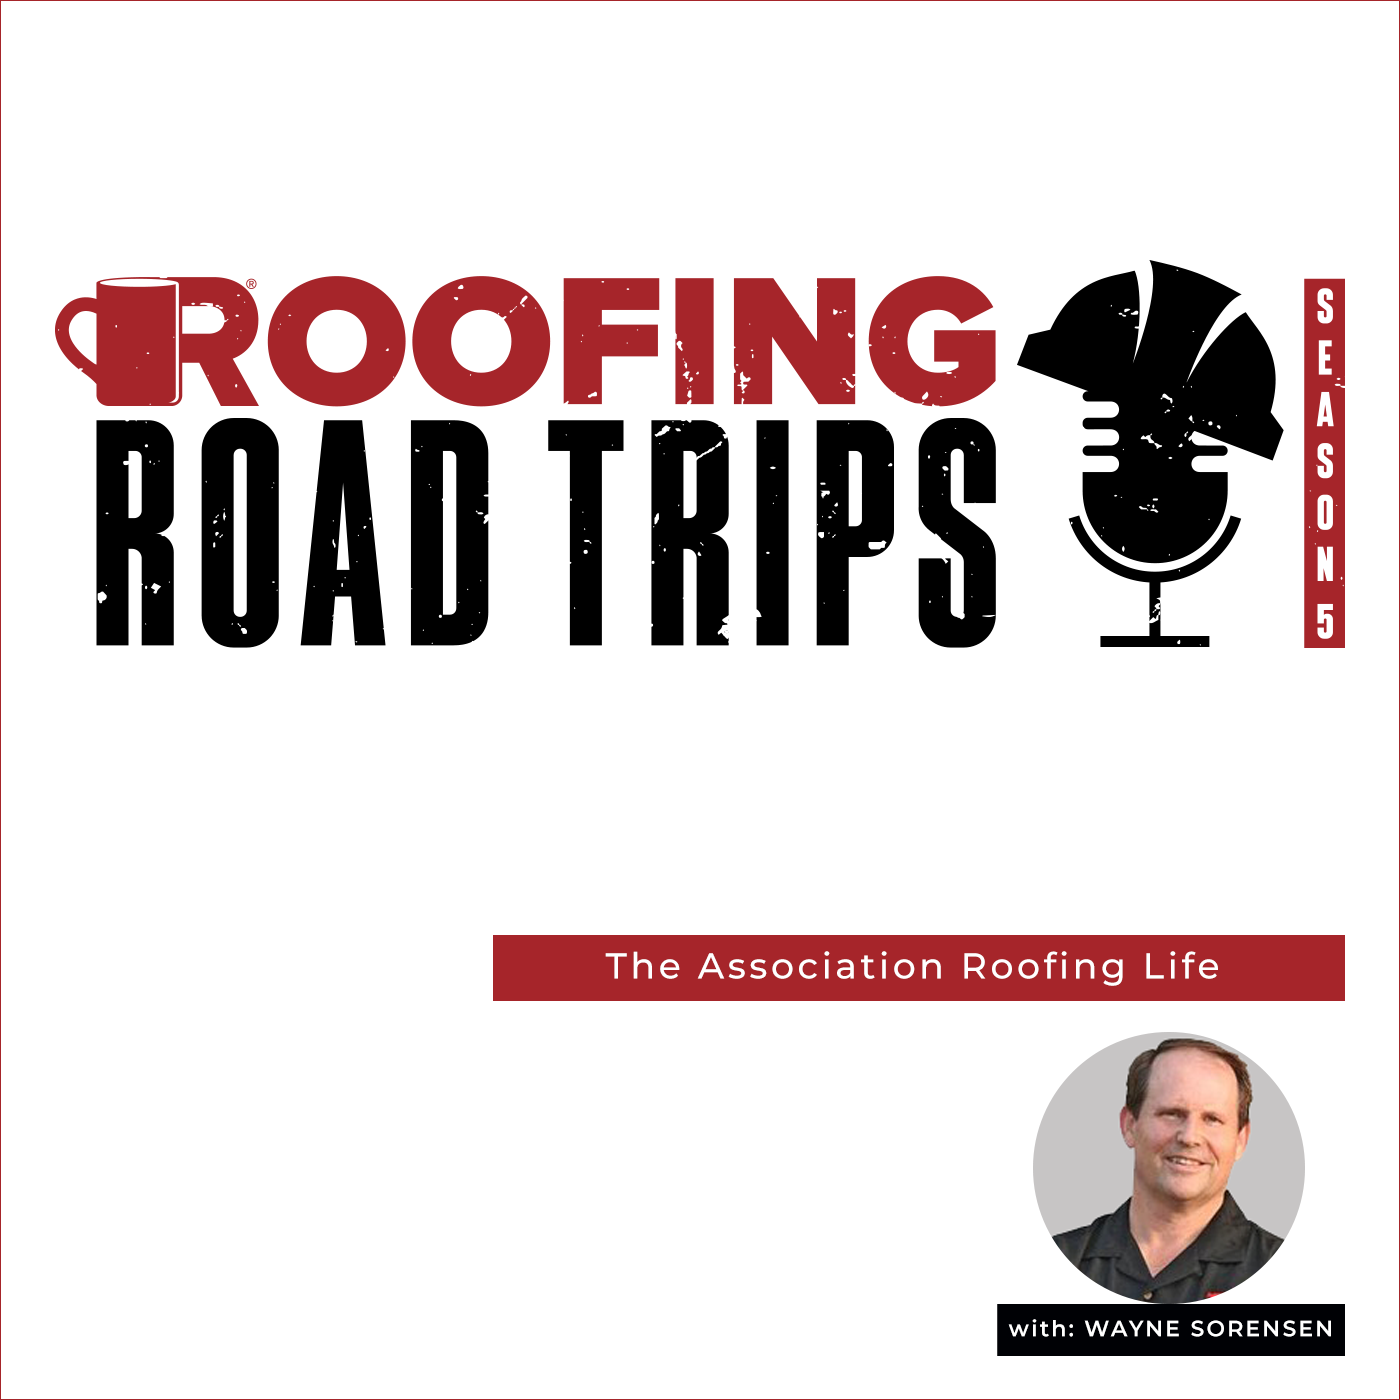 Wayne Sorensen - The Association Roofing Life